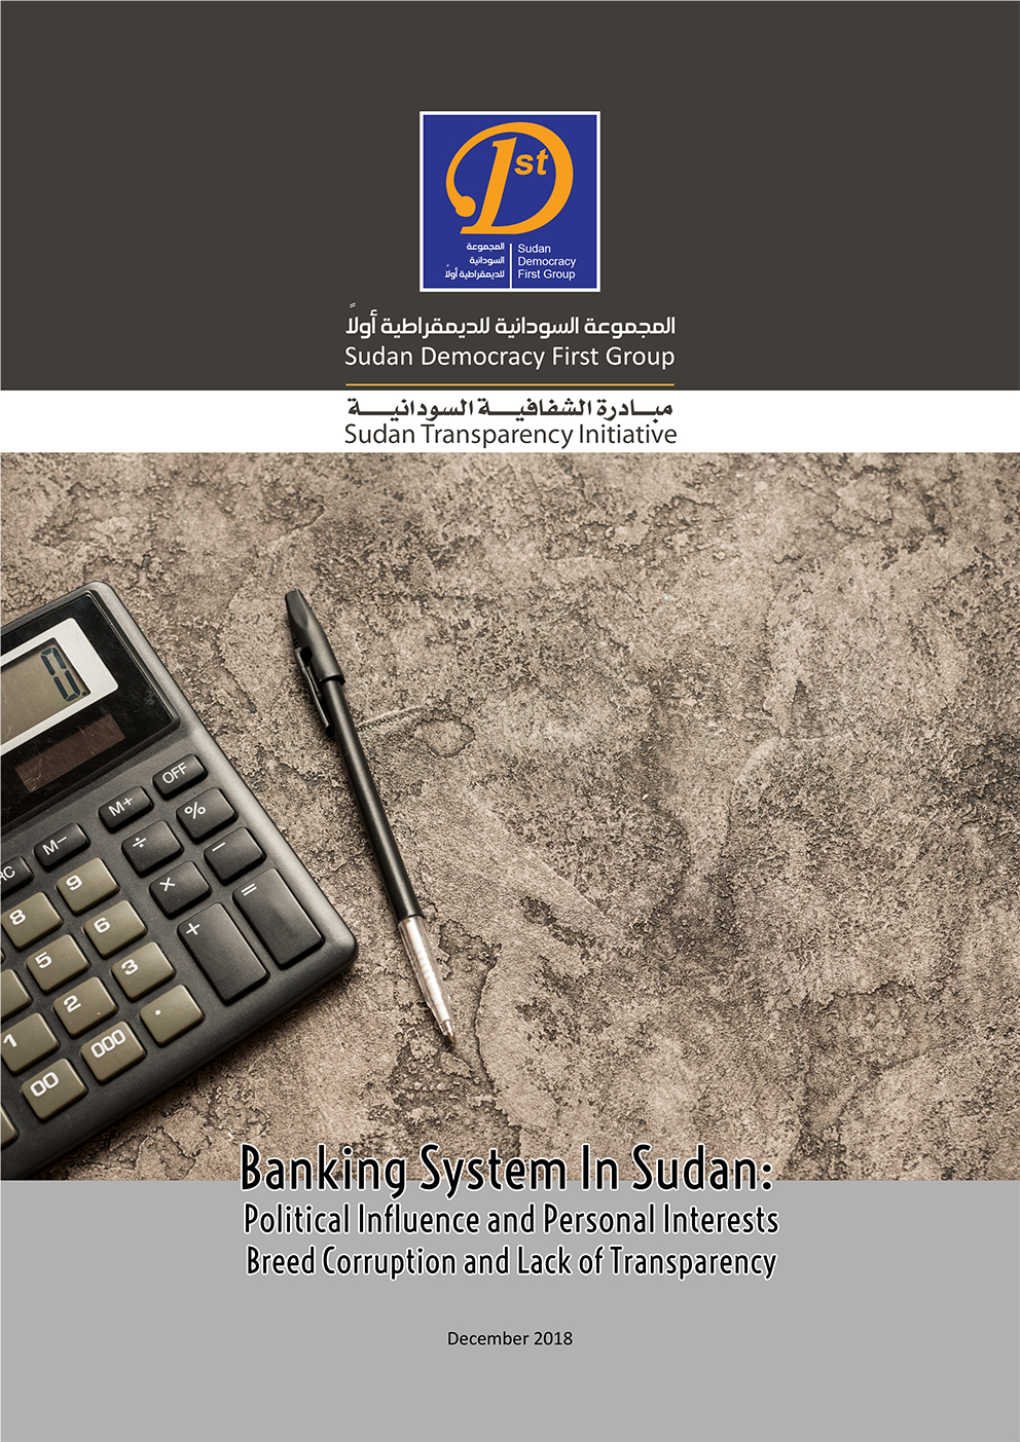 Sudan Banking System